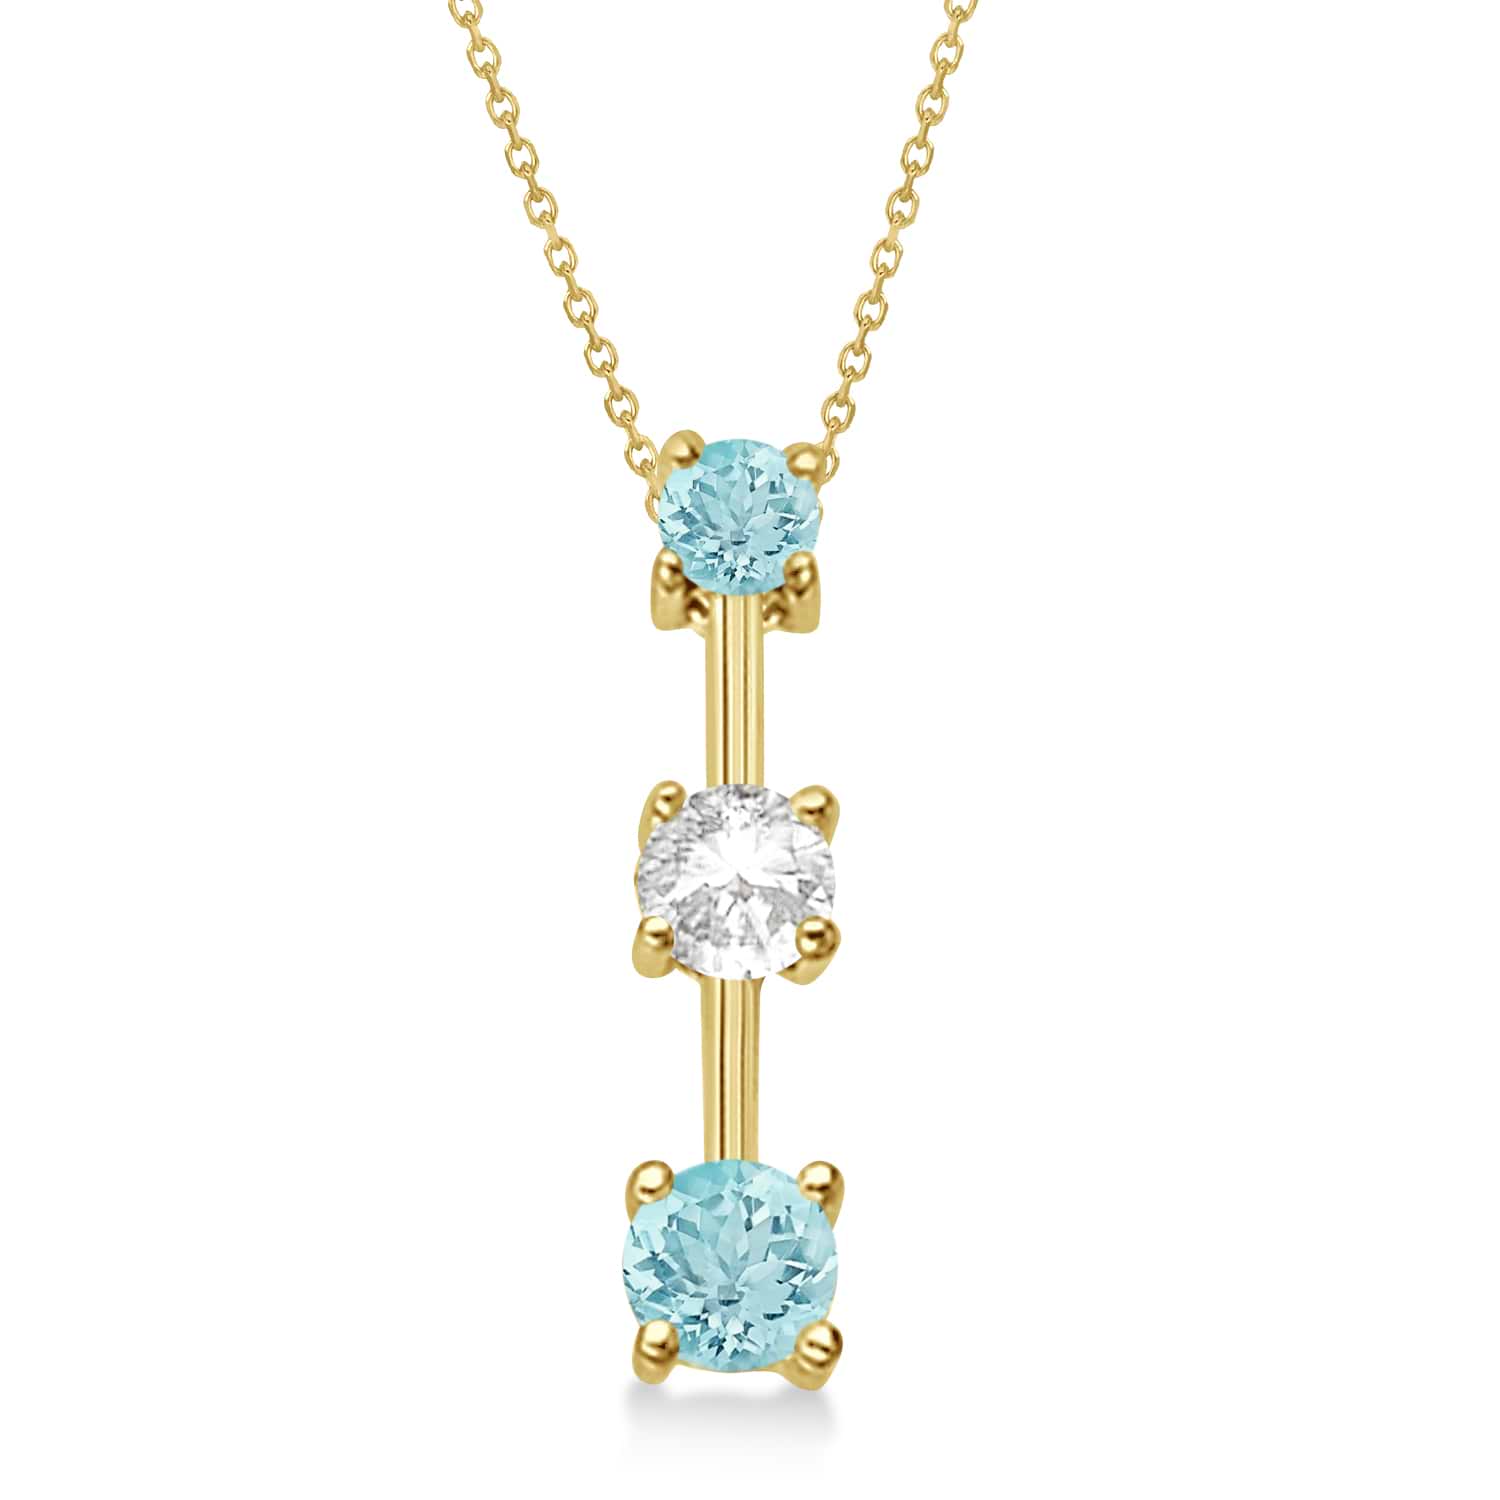 Aquamarines & Diamond Three-Stone Necklace 14k Yellow Gold (0.25ct)